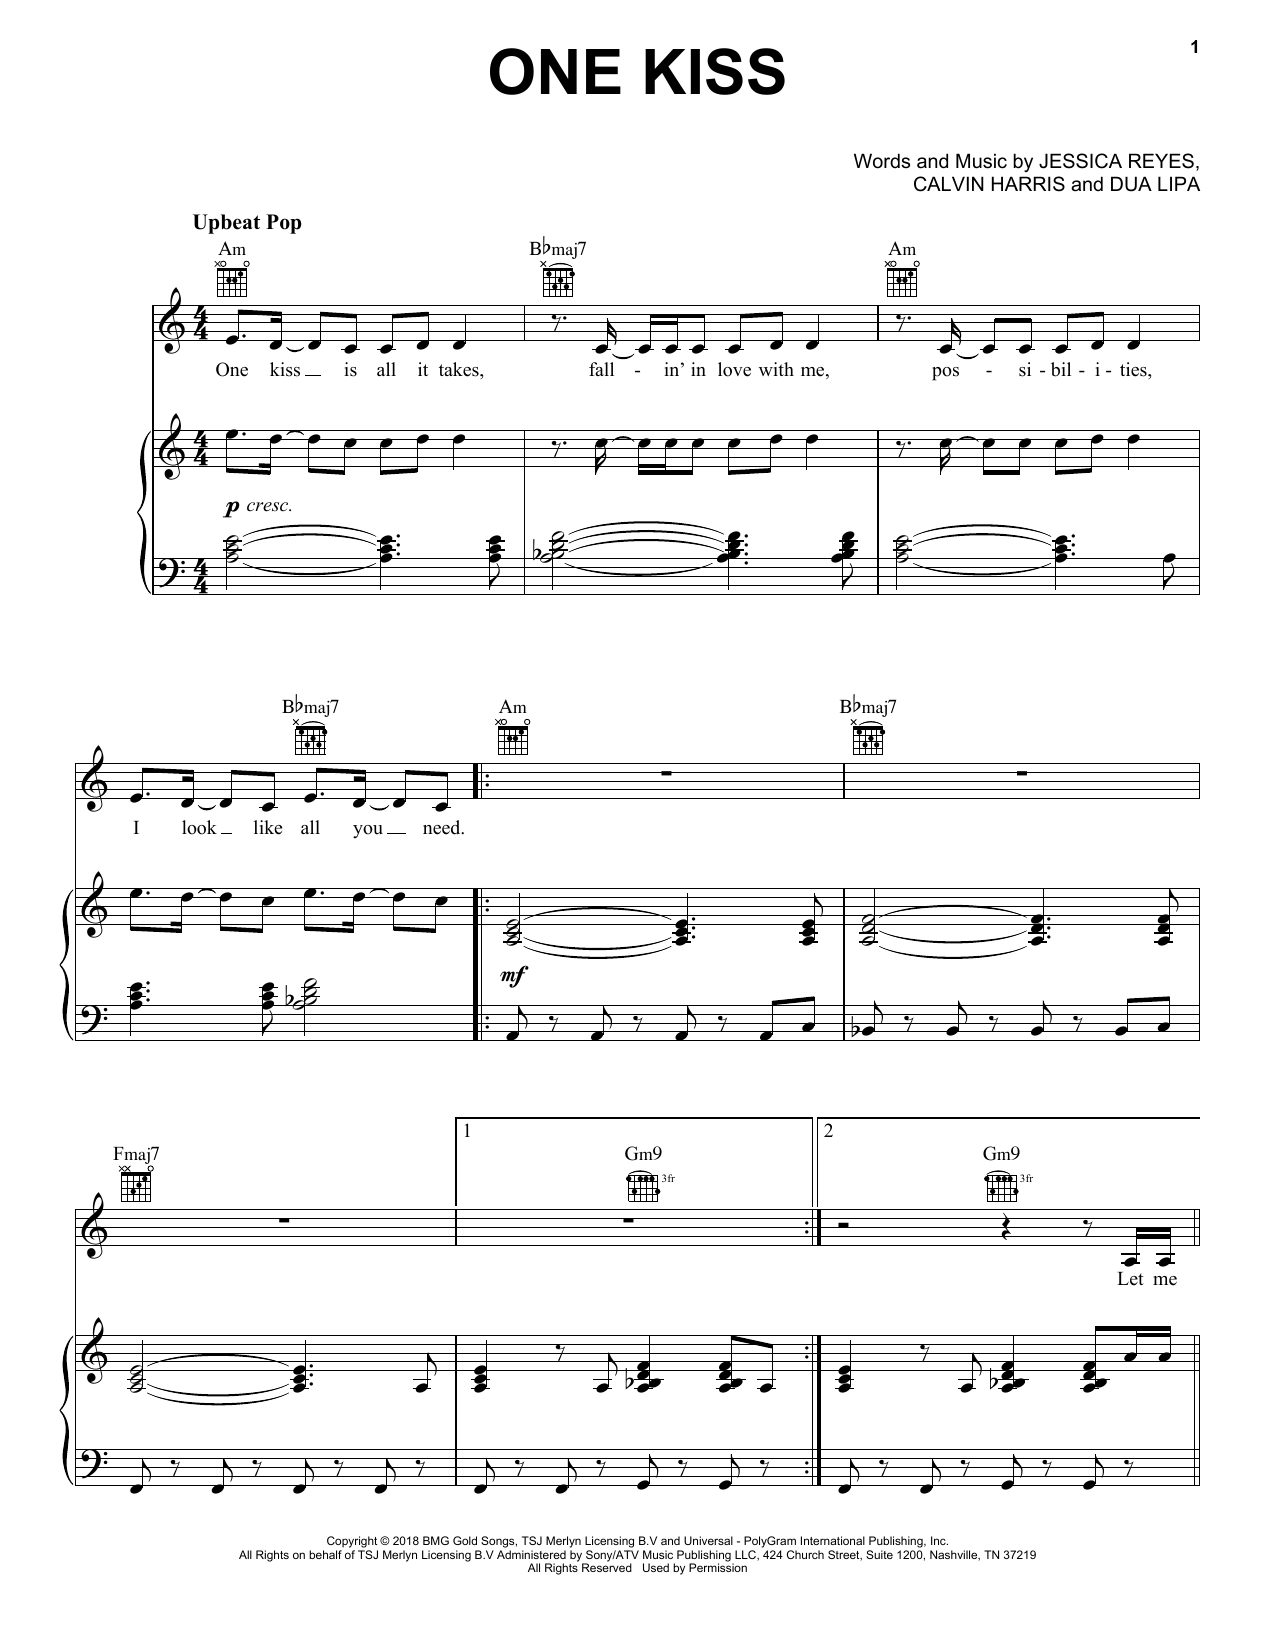 Calvin Harris & Dua Lipa One Kiss Sheet Music Notes & Chords for Ukulele - Download or Print PDF